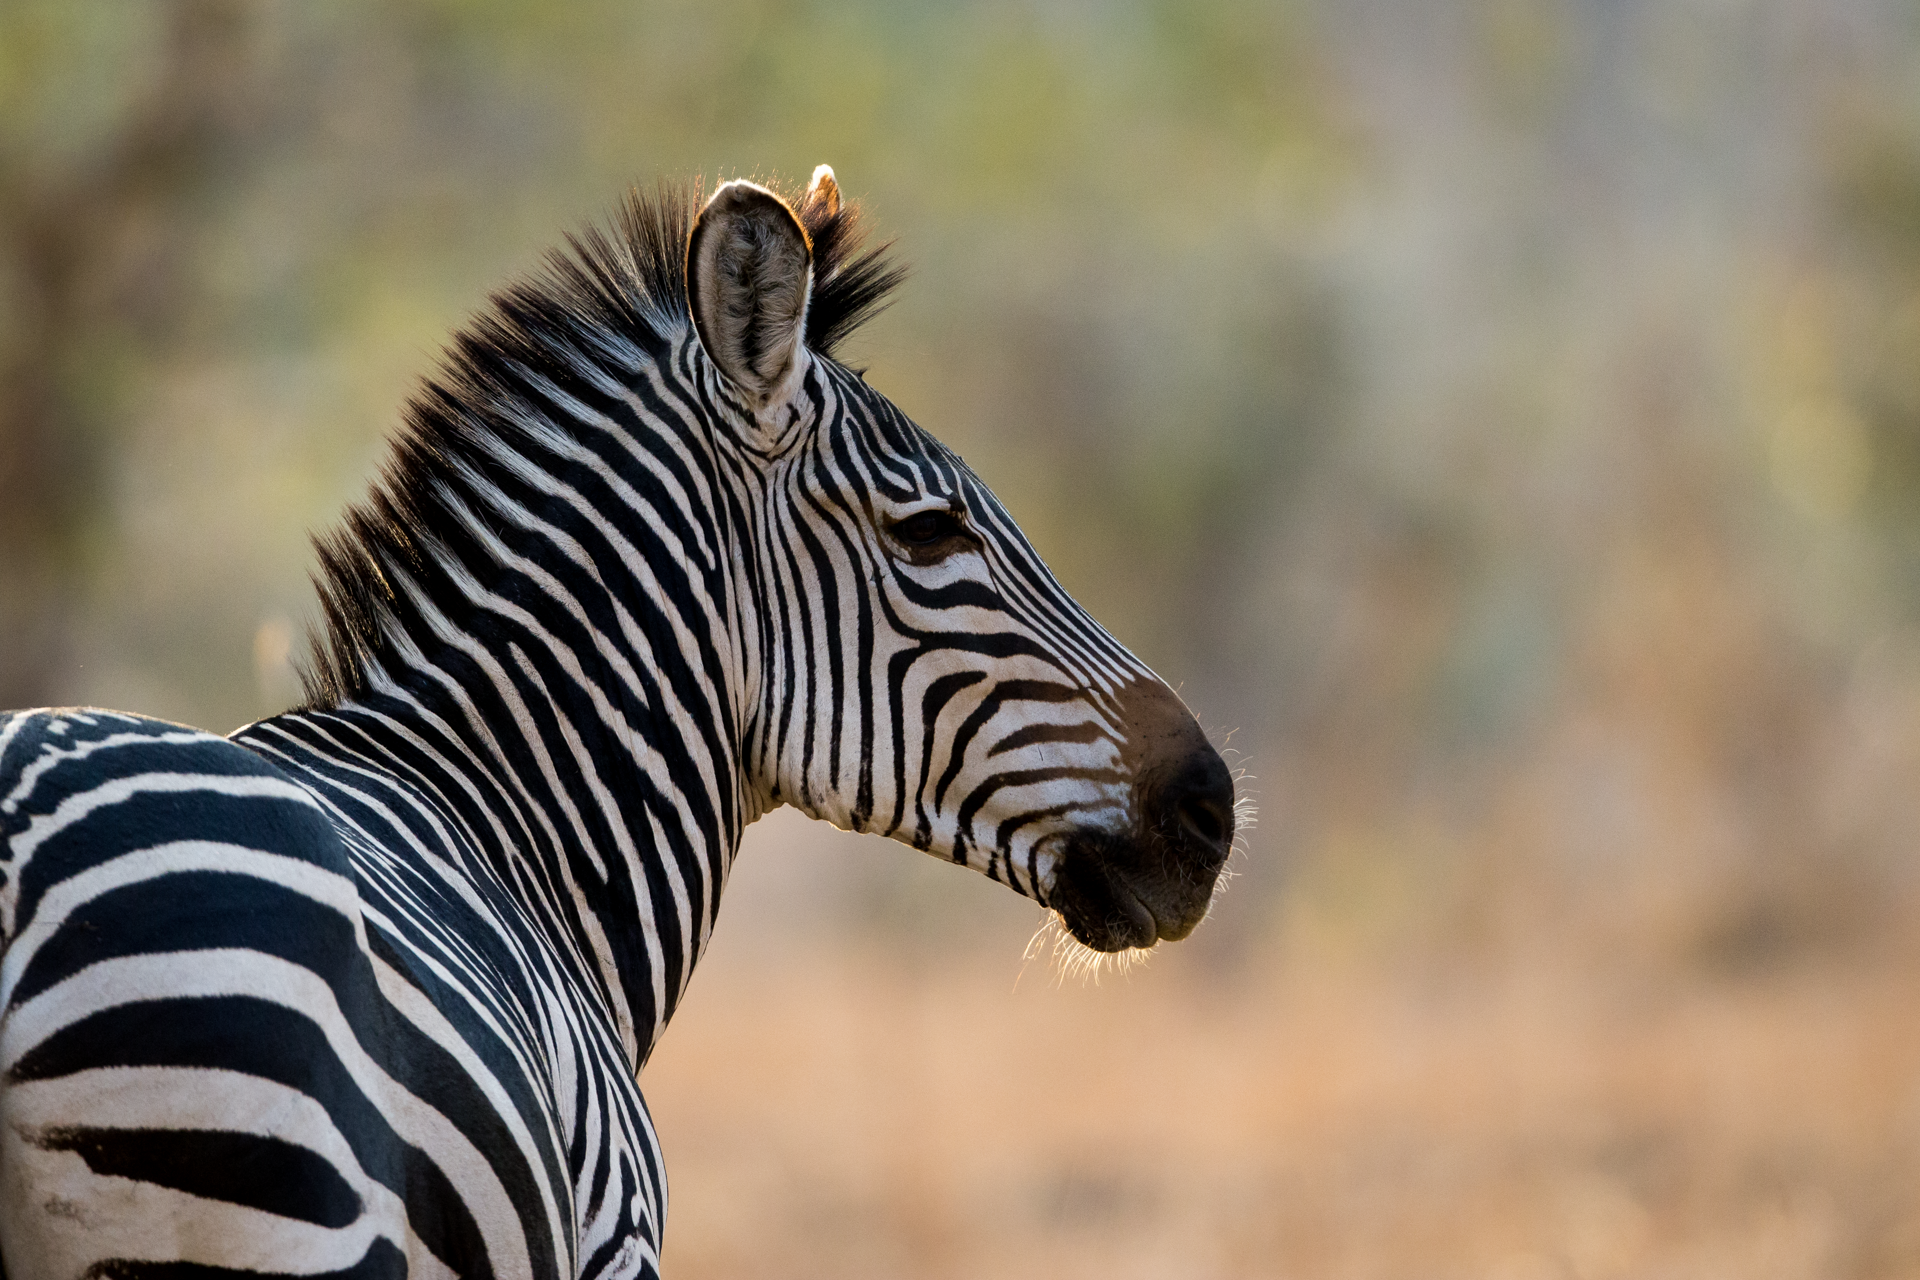 a close up of a zebra 's head and neck